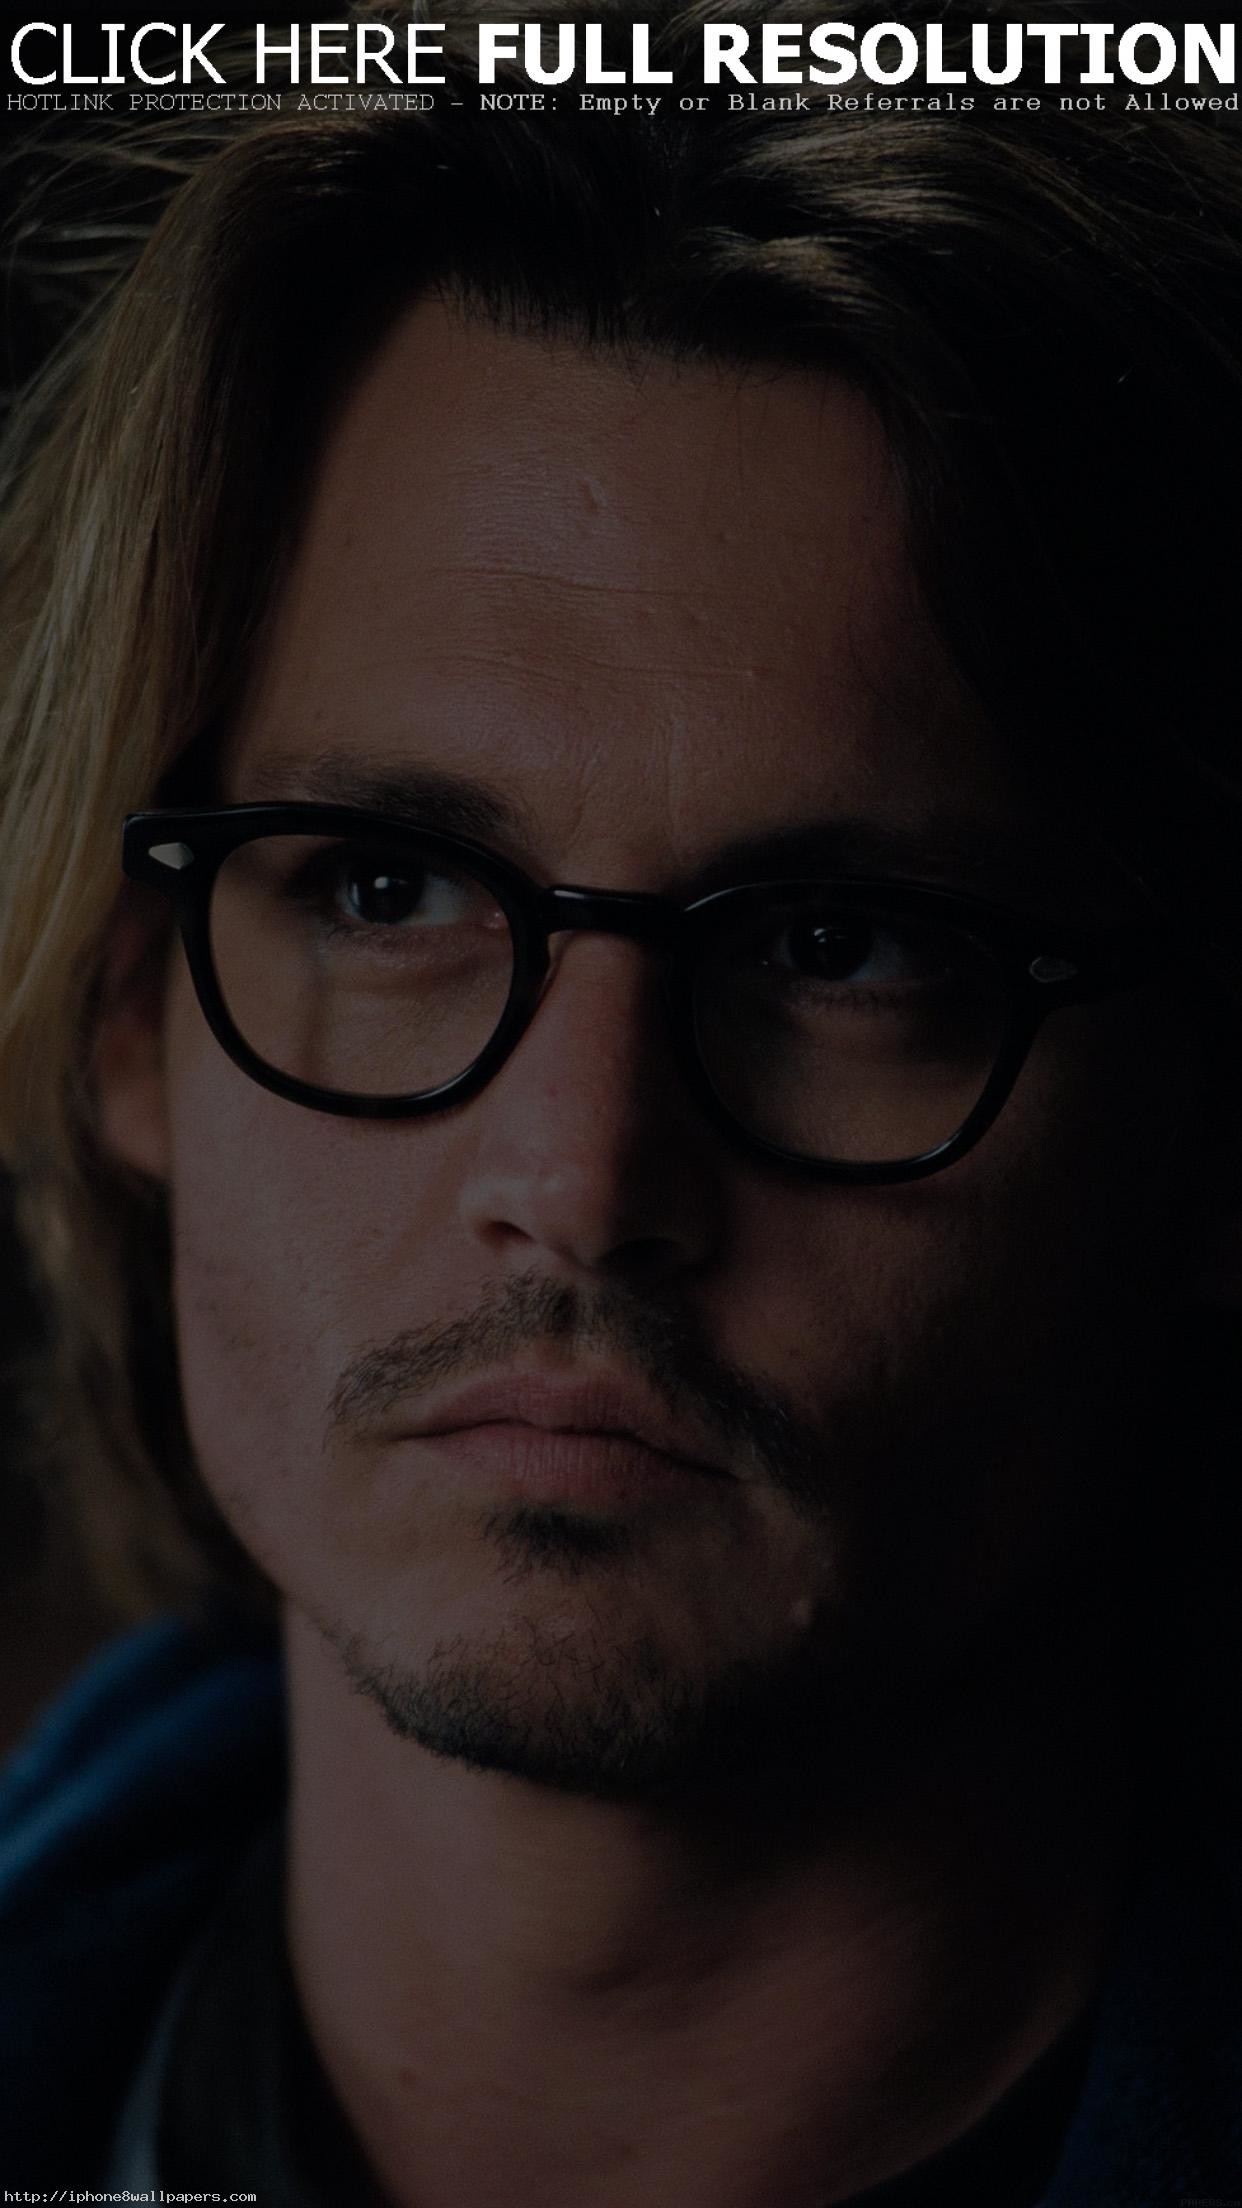 Wallpaper Johnny Depp Glass Film Actor Face Android - Warren Street Tube Station - HD Wallpaper 